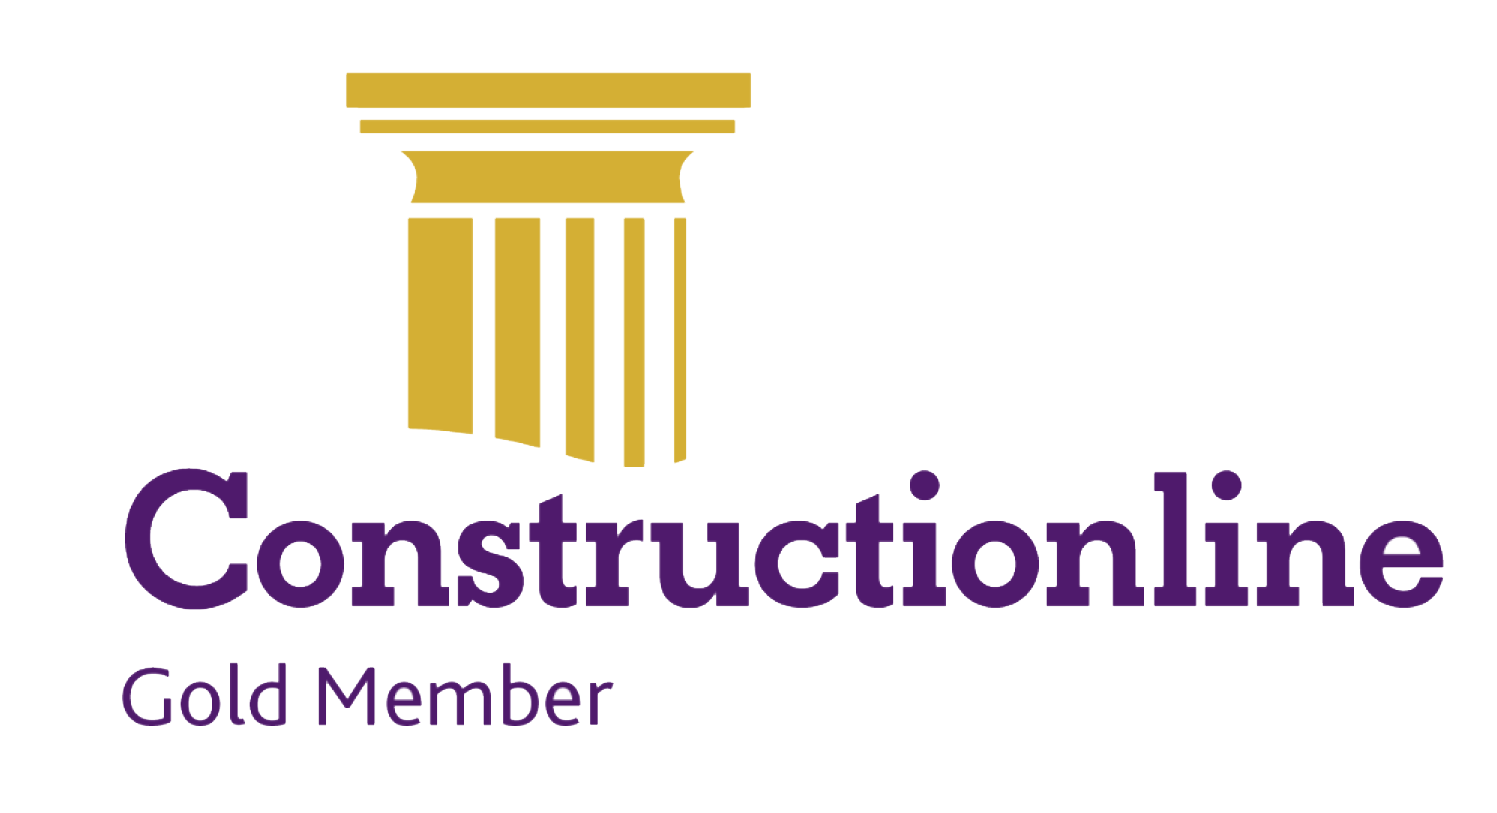 Construction Line Gold accreditation logo